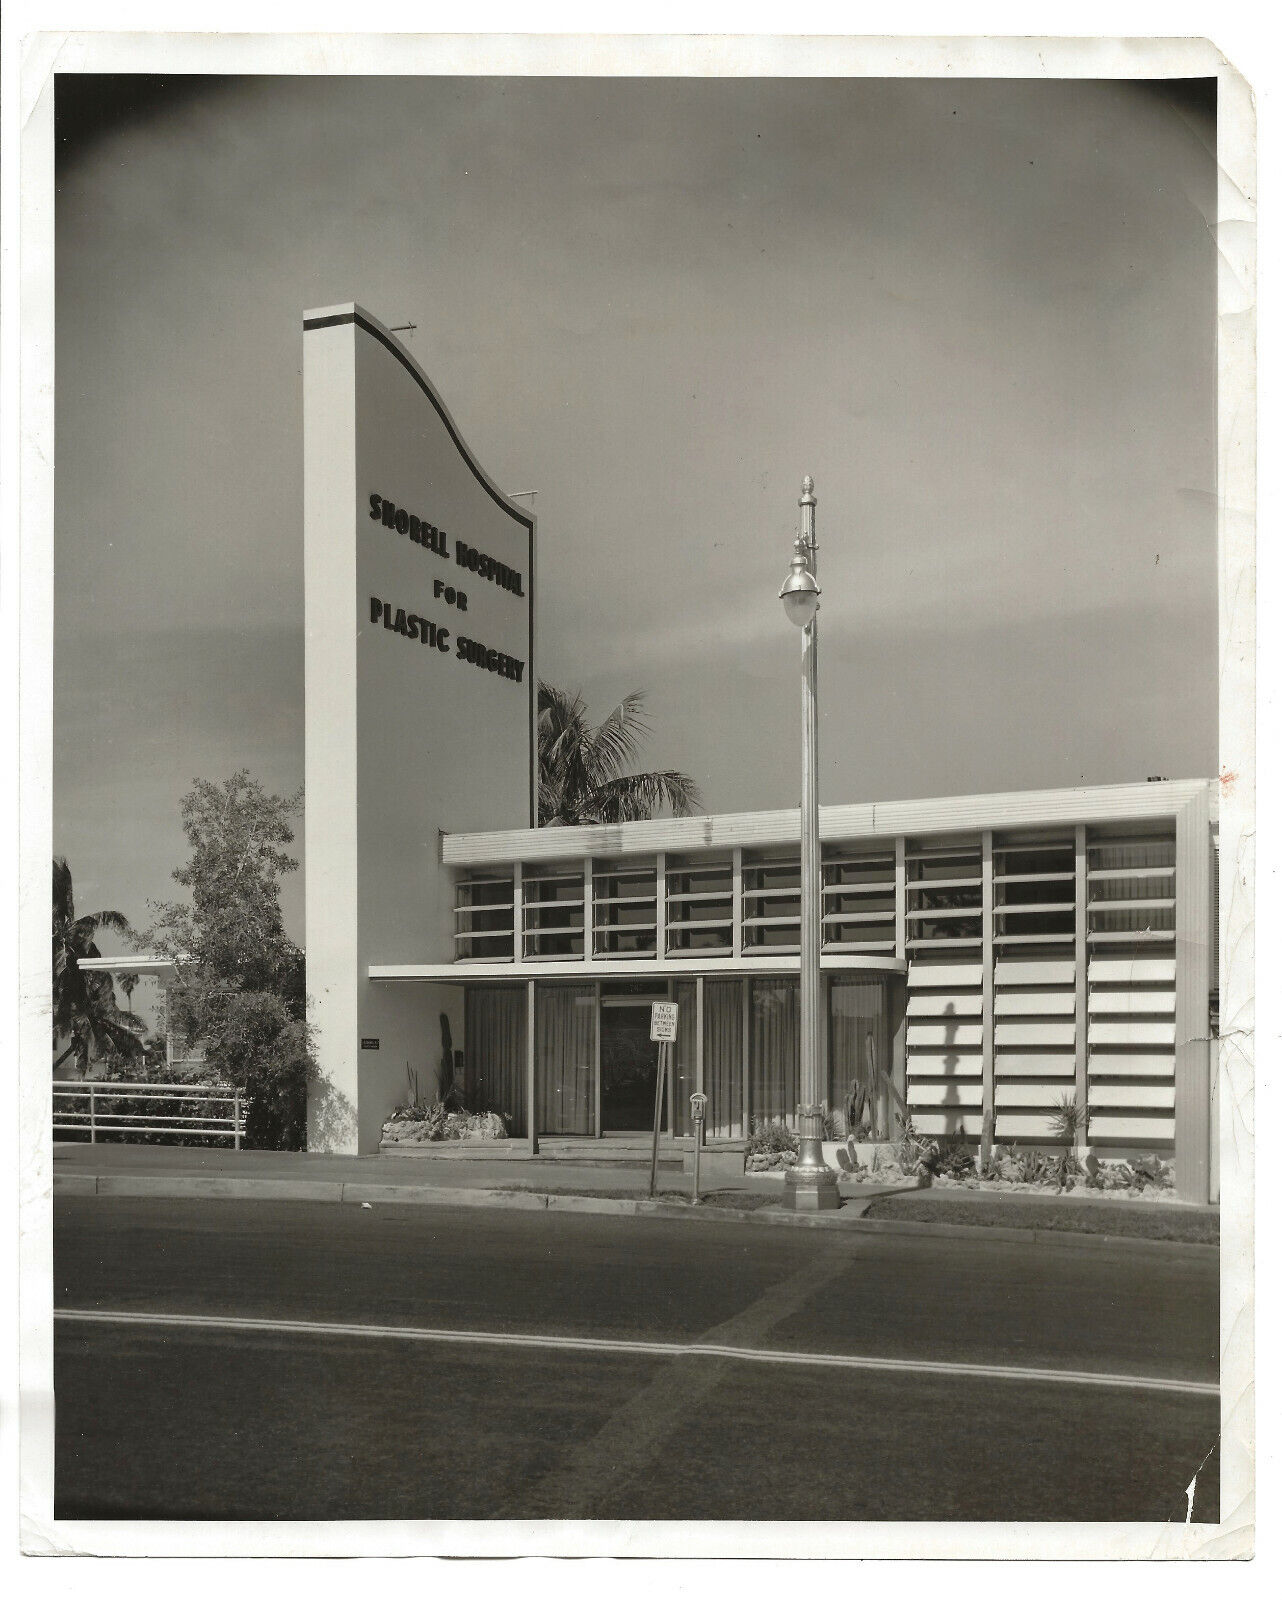 Miami Florida-Shorell Hospital For Plastic Surgery-1952 Press Photo (PB1-160)